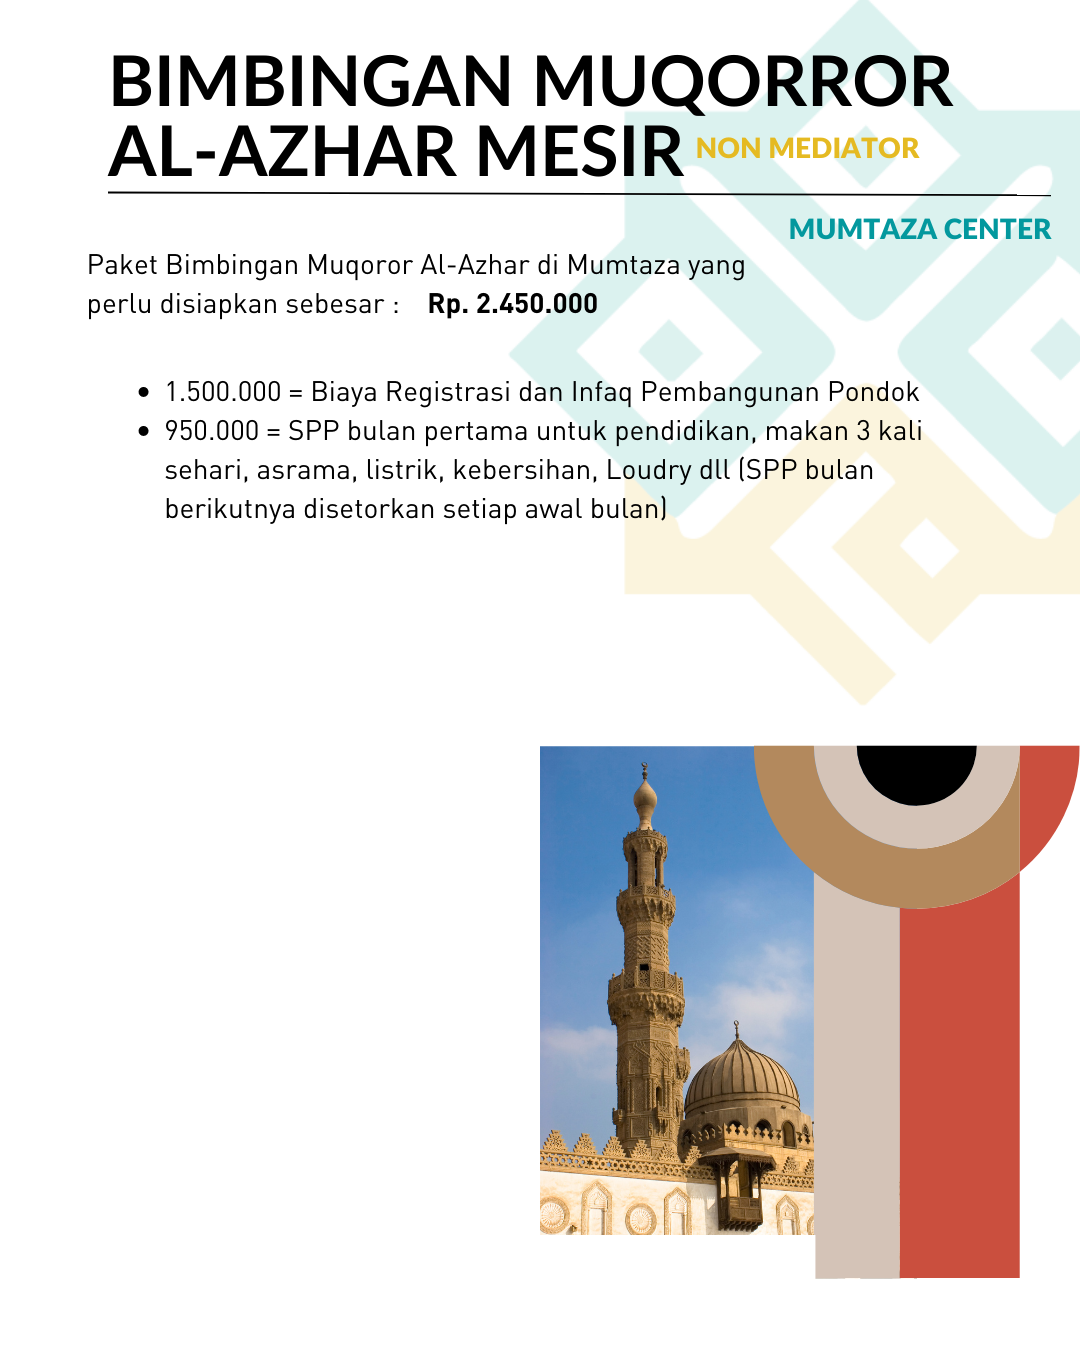 Program Bimbingan Muqorror Al-Azhar Mesir